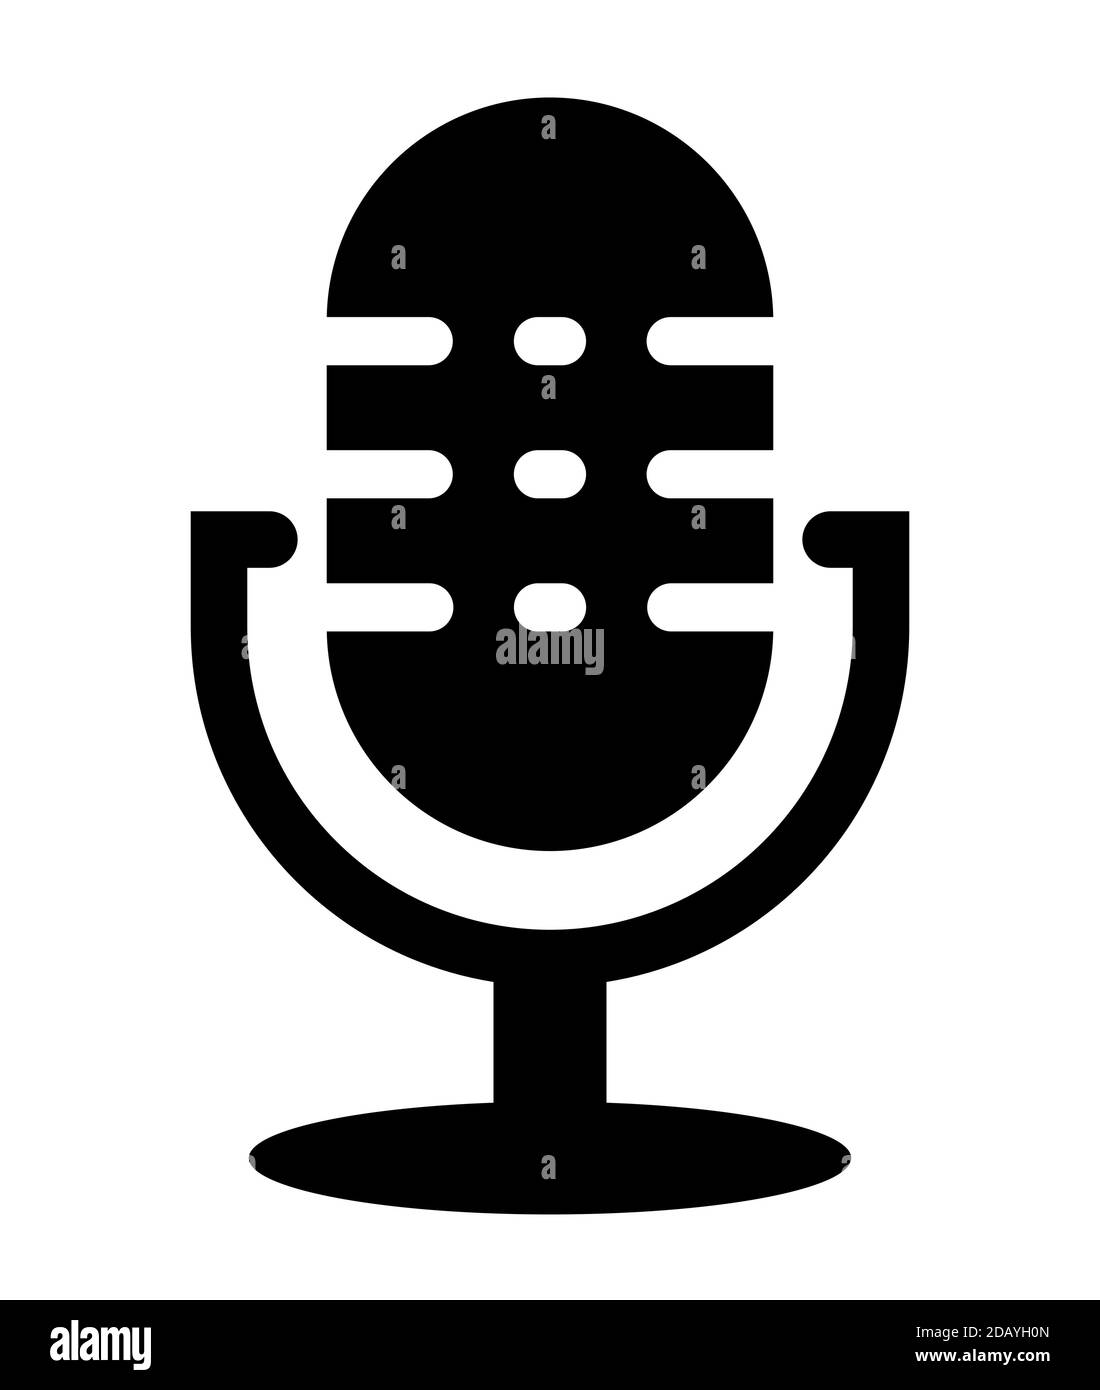 Podcast radio media microphone icon or logo symbol vector illustration Stock Vector